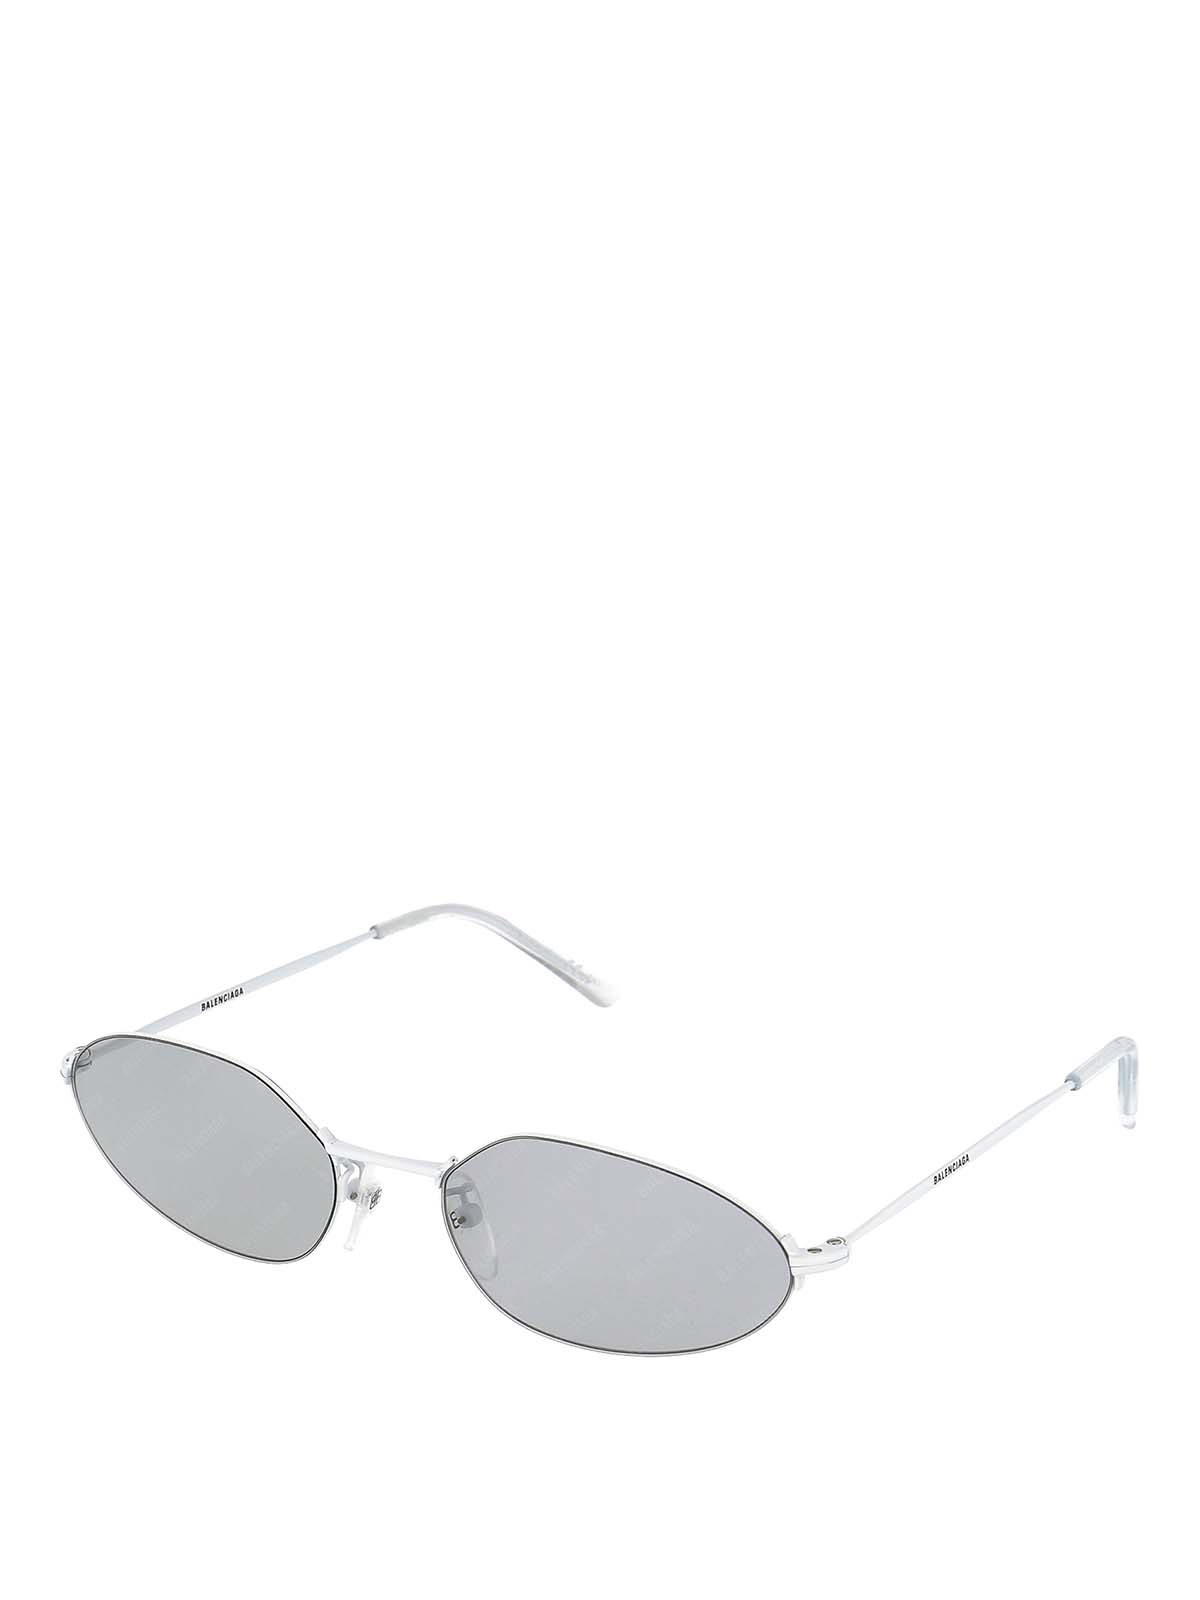 Balenciaga Invisible Light Grey Sunglasses